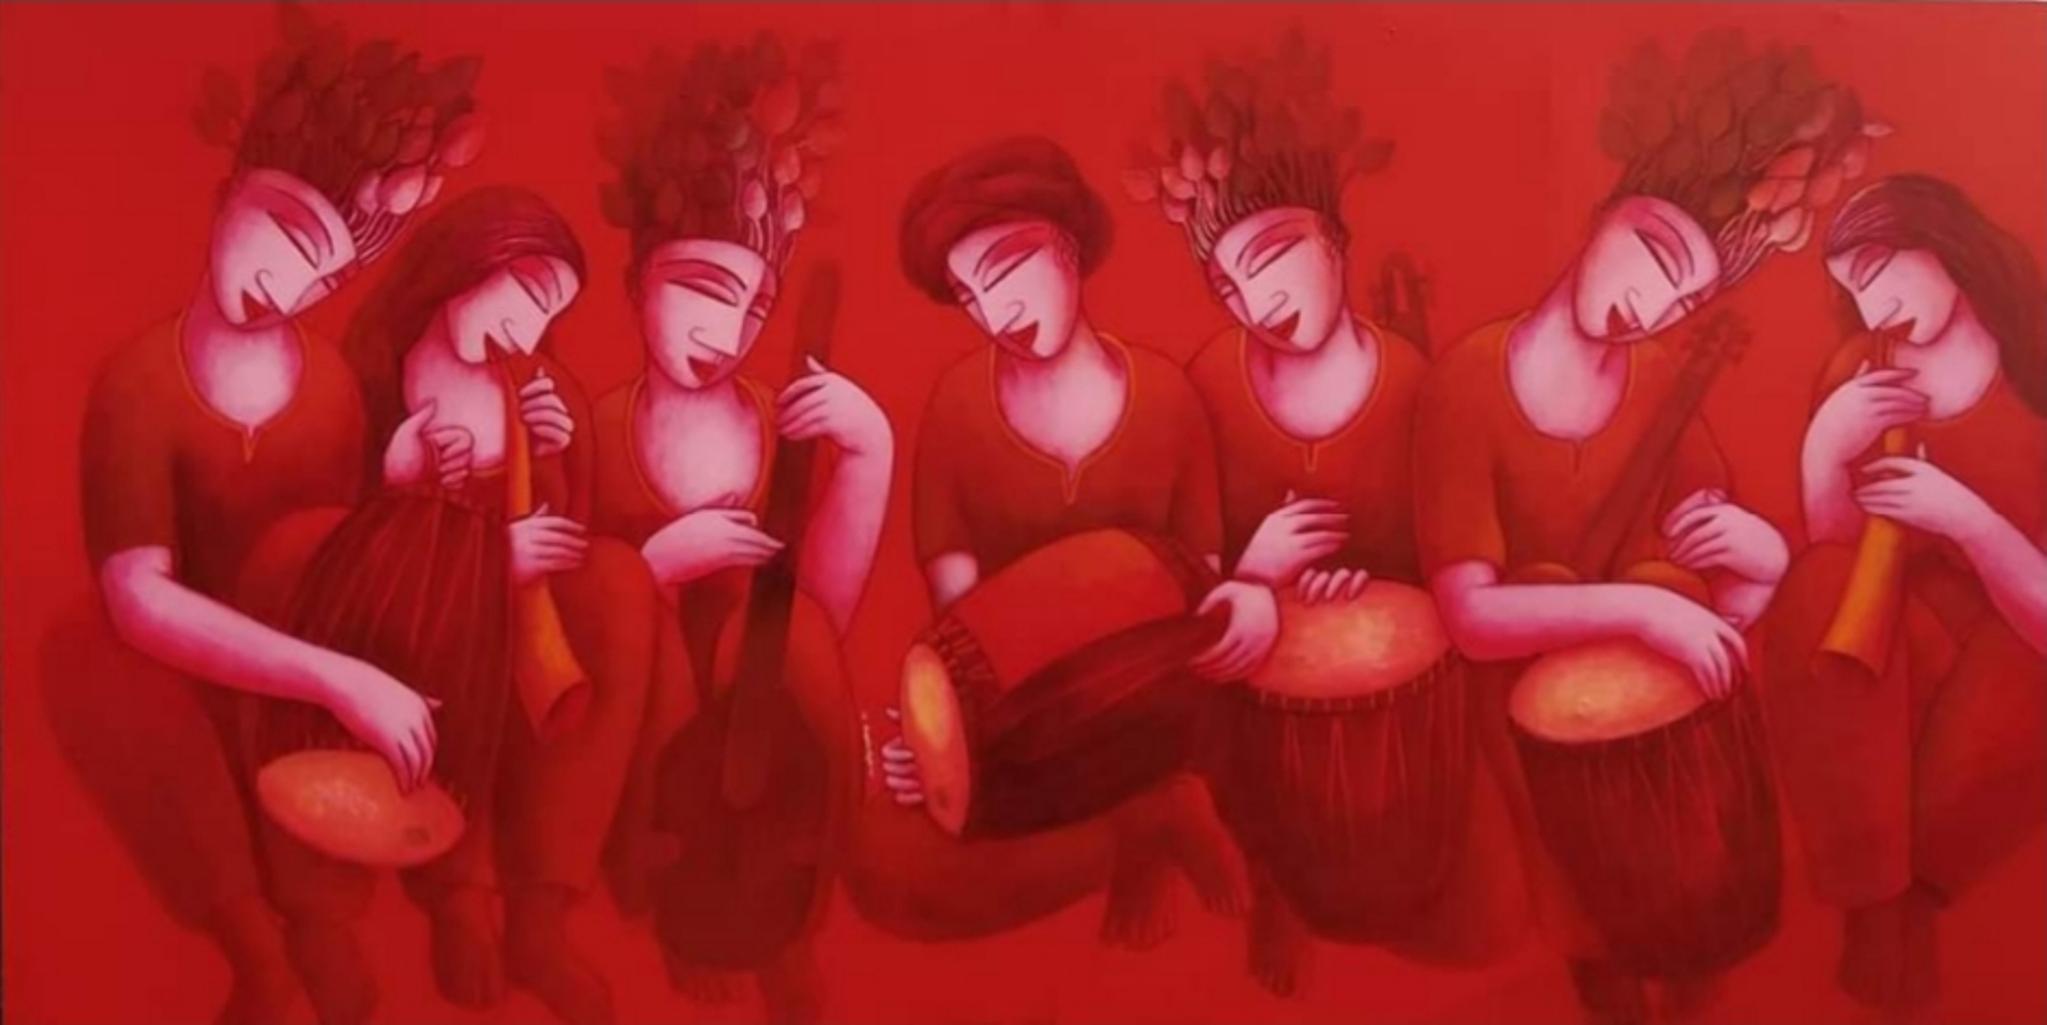 Sound-70, acrylique sur toile d'un artiste indien contemporain, en stock - Art de Samir Sarkar